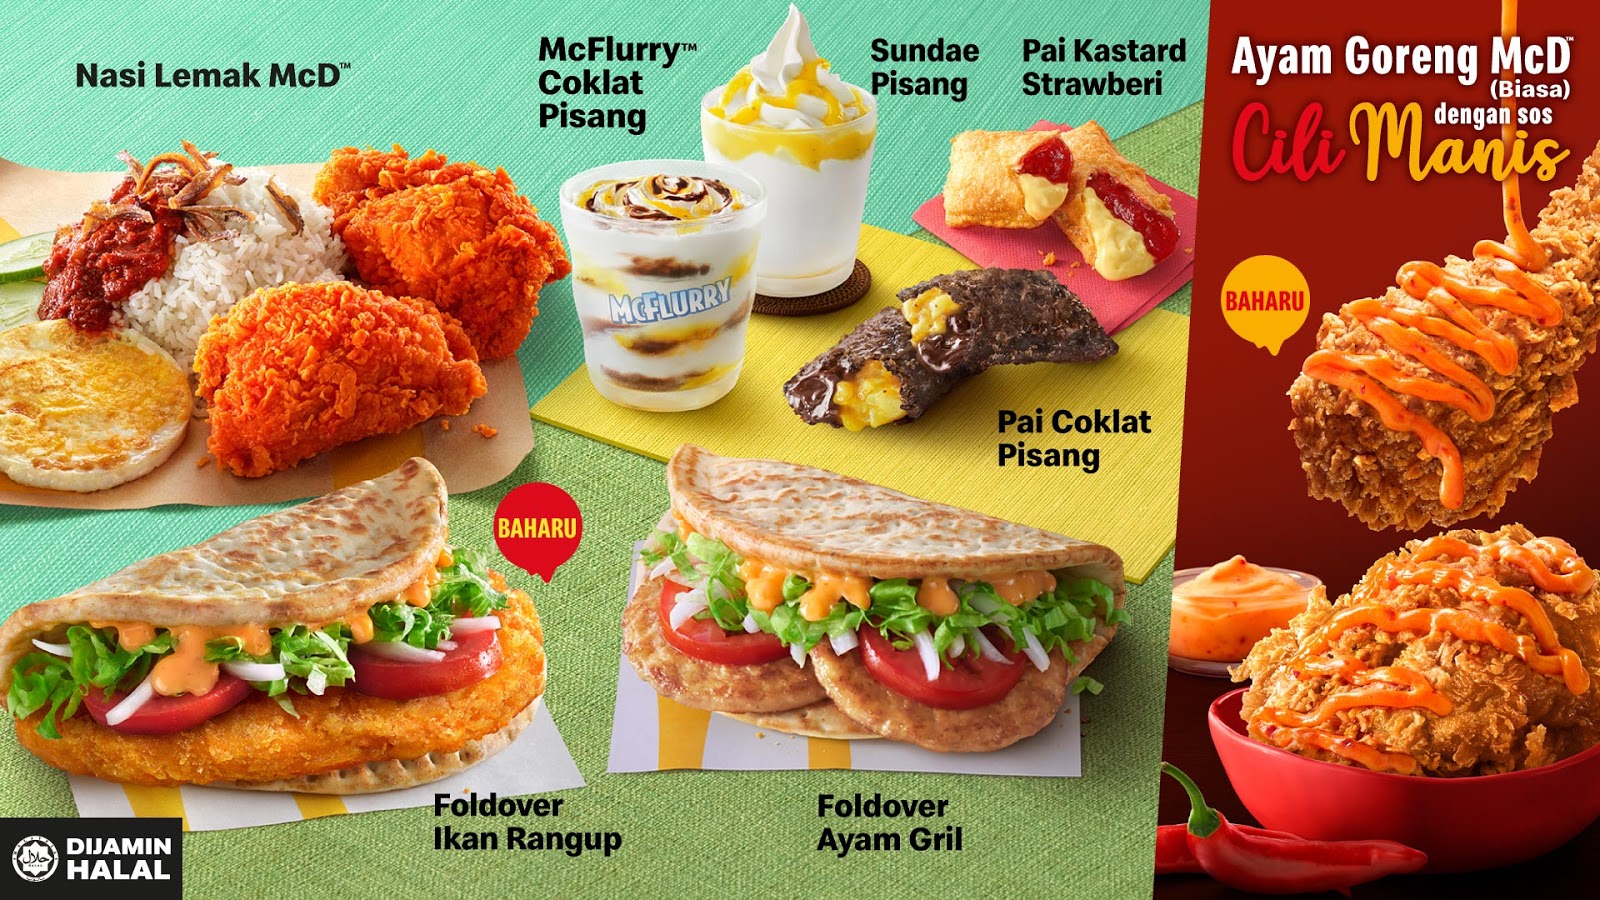 McDonaldu0027s Malaysia introduces new twist to Ramadan menu favourites